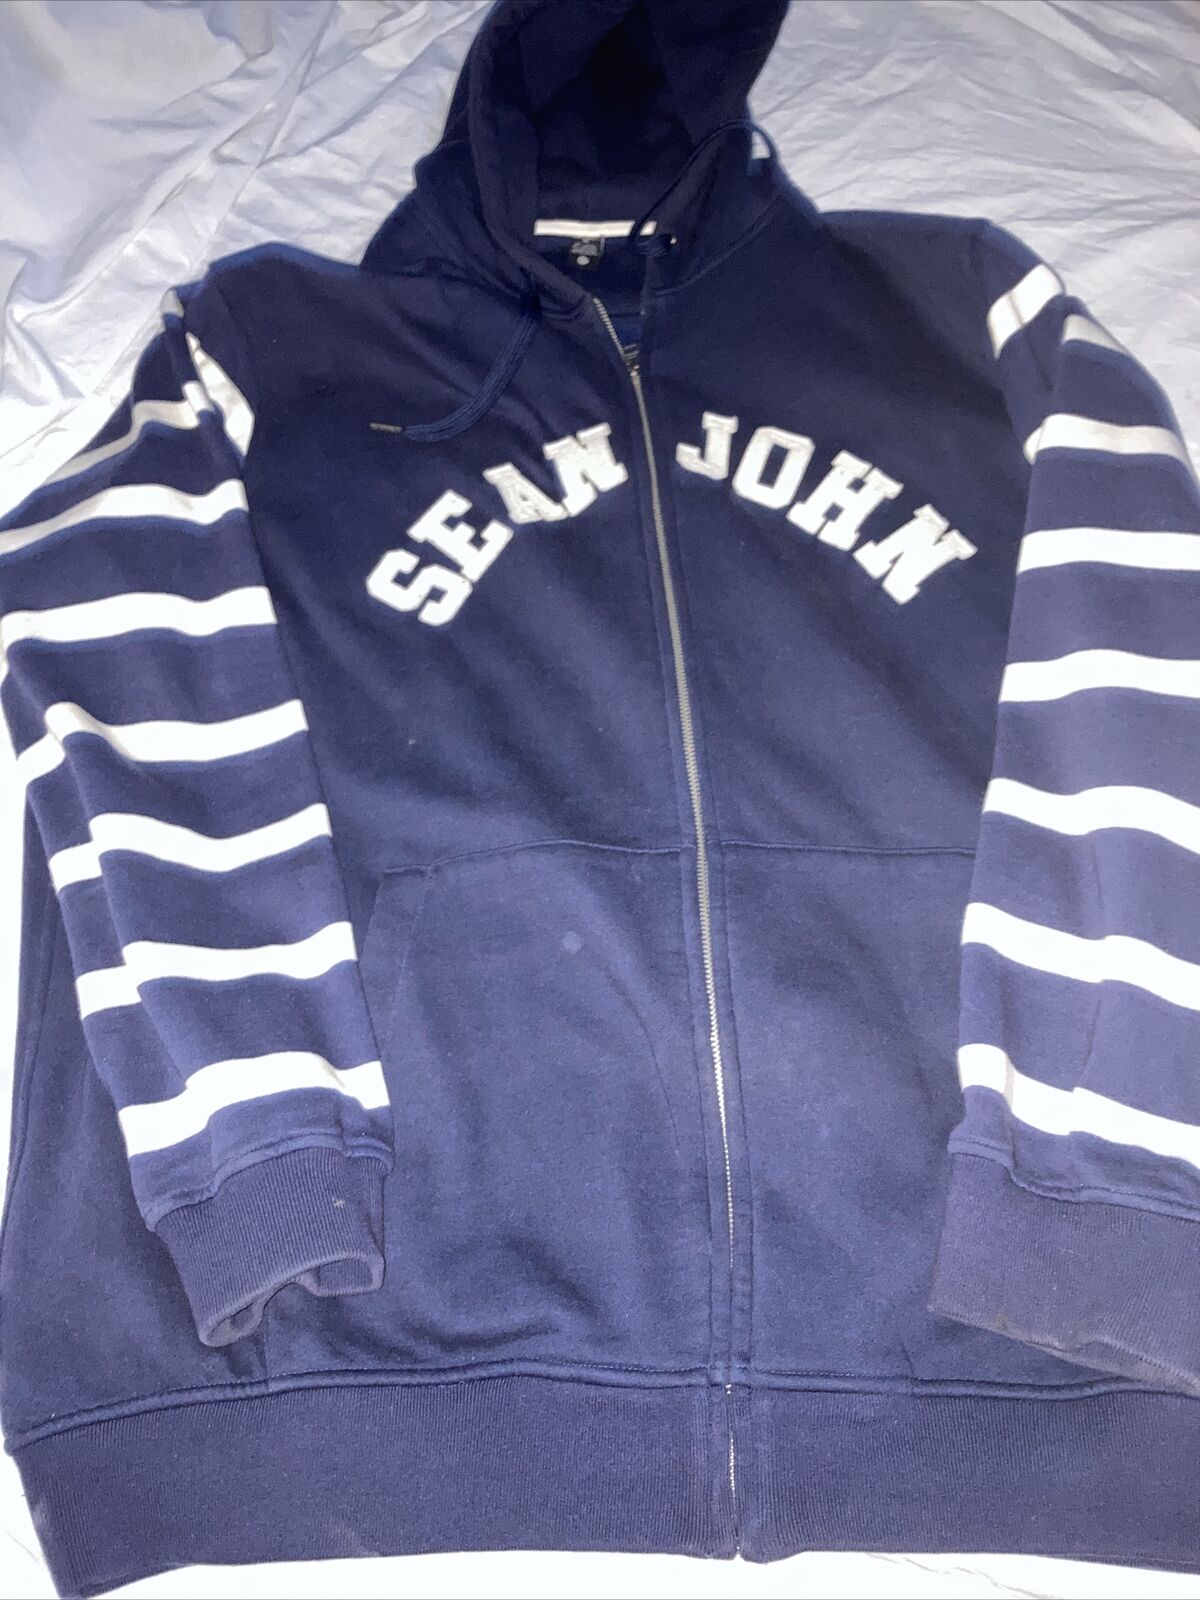 Men's Sean John Zip Up Cotton Hoodie Jacket Size XL | eBay